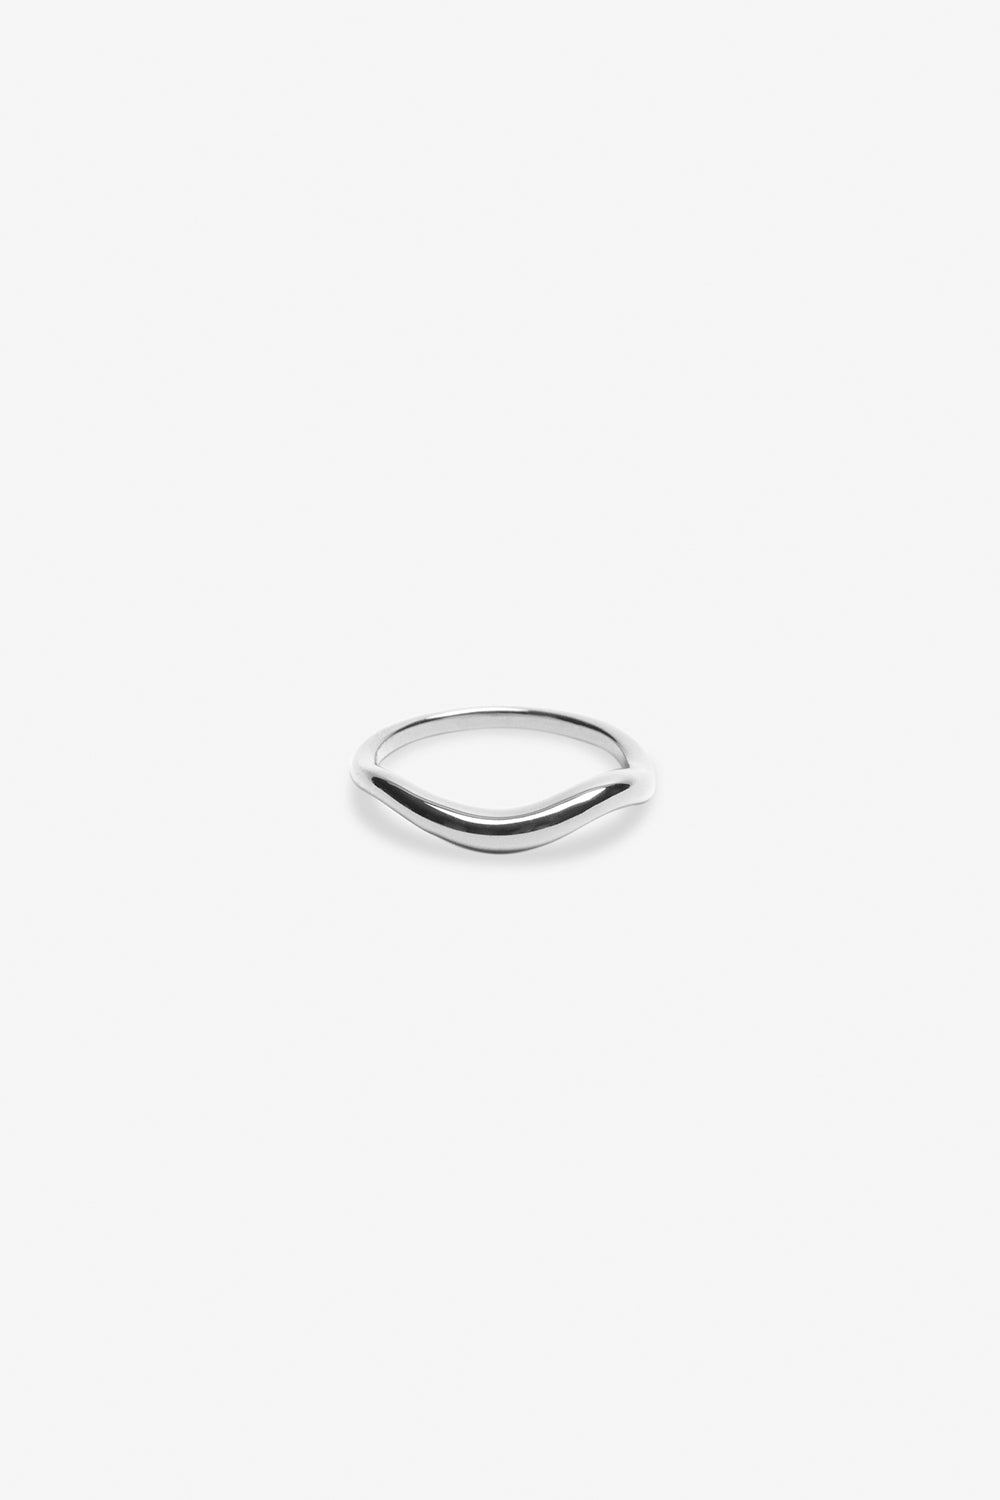 Ventee Ring - Sterling Silver